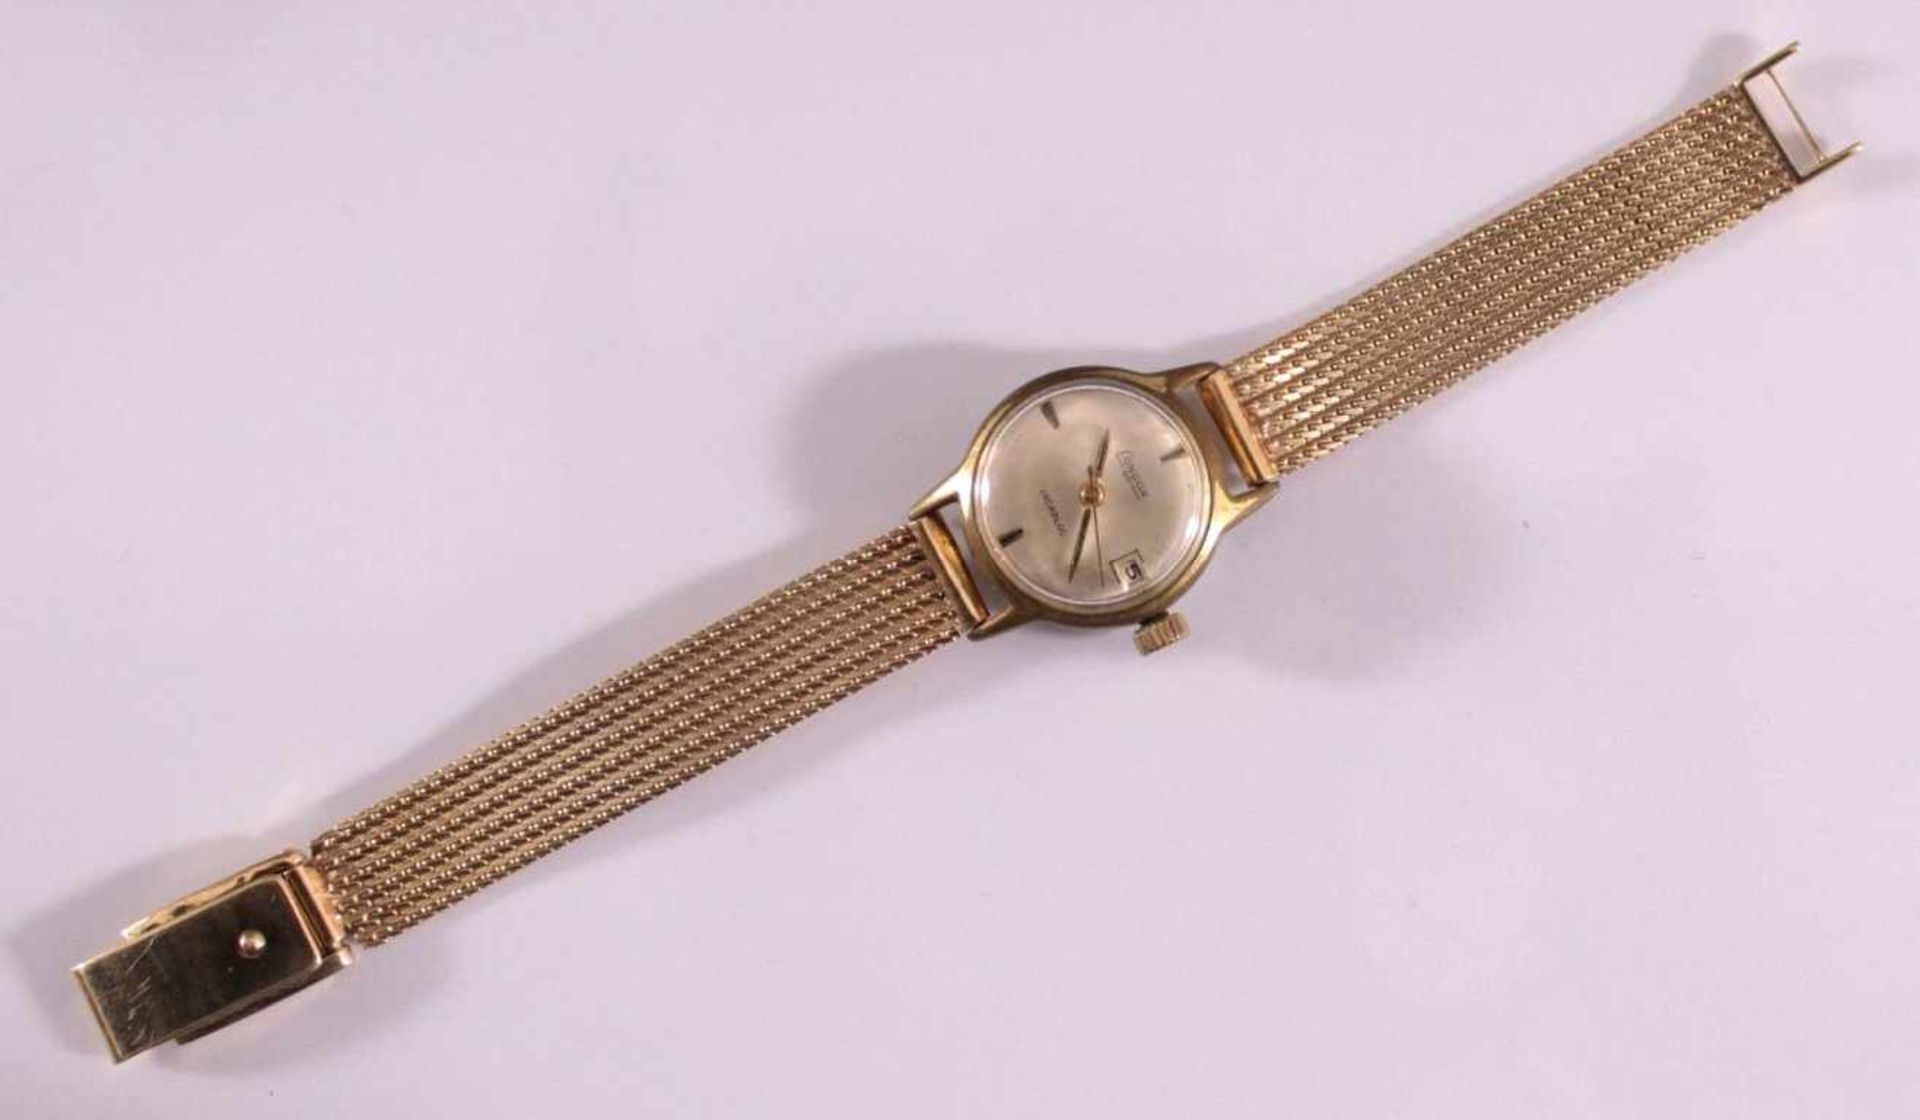 DamenarmbanduhrLondon Incabloc, Uhrwerksgehäuse vergoldet, sehr starkberieben, Funktion geprüft.